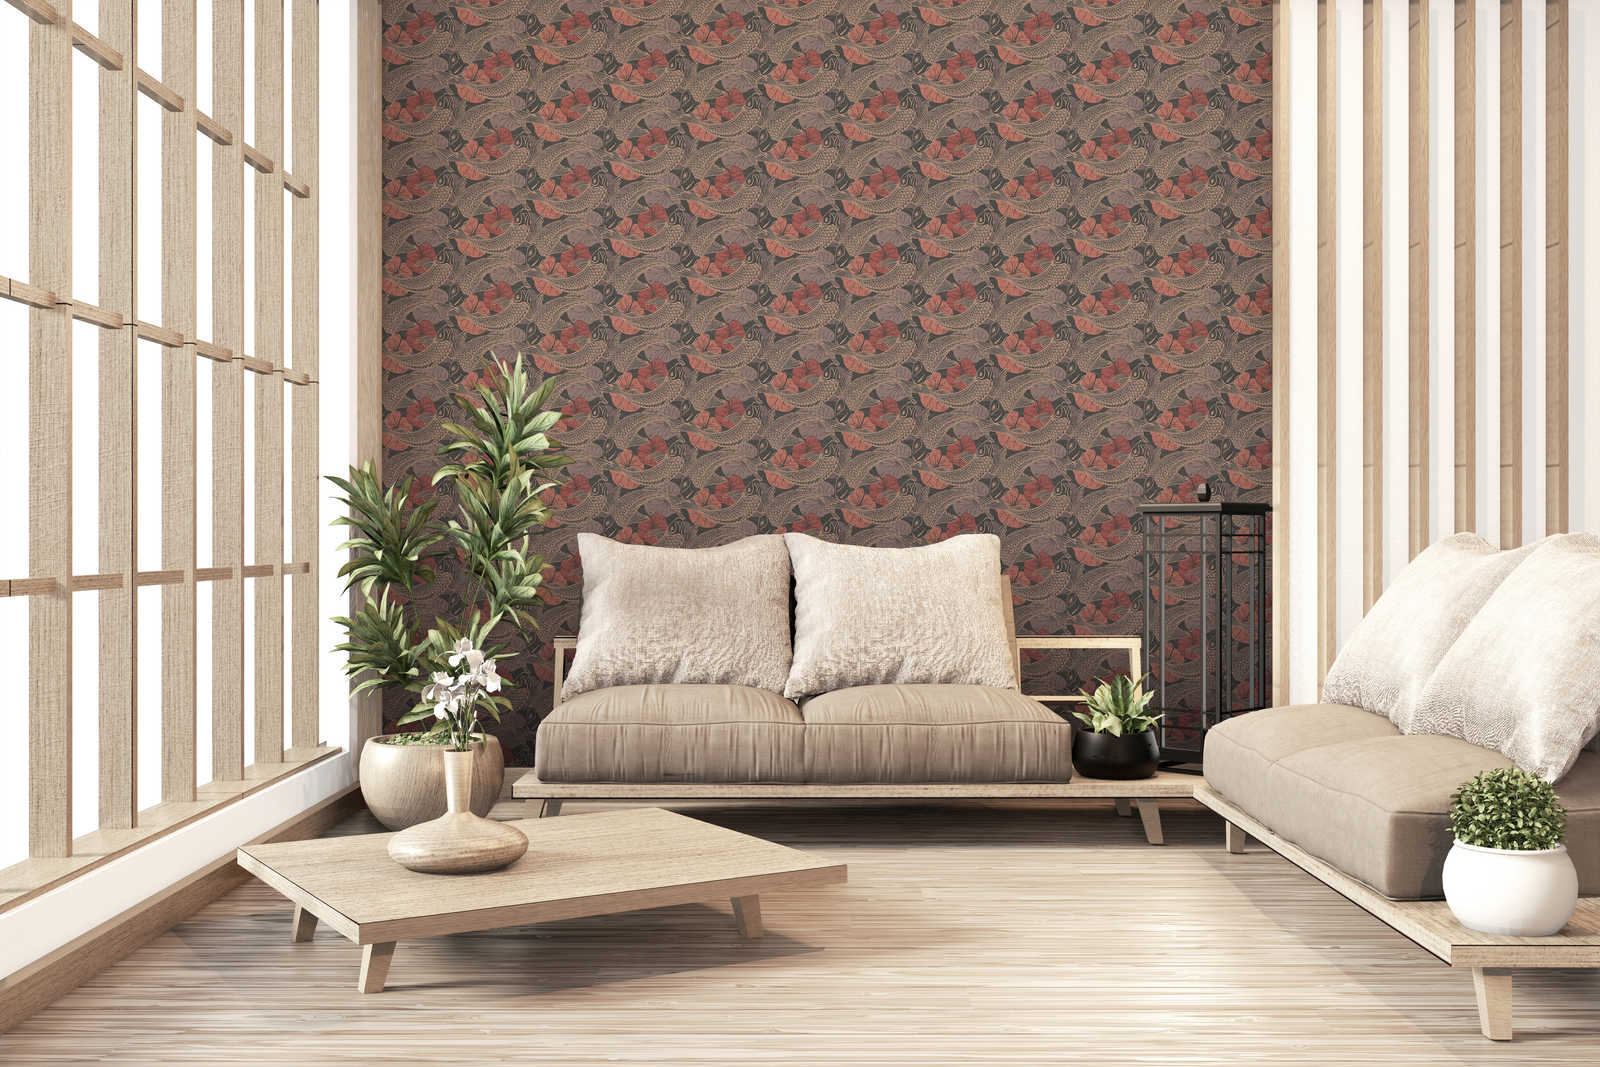             Pattern wallpaper koi motif with metallic accents - brown, red, black
        